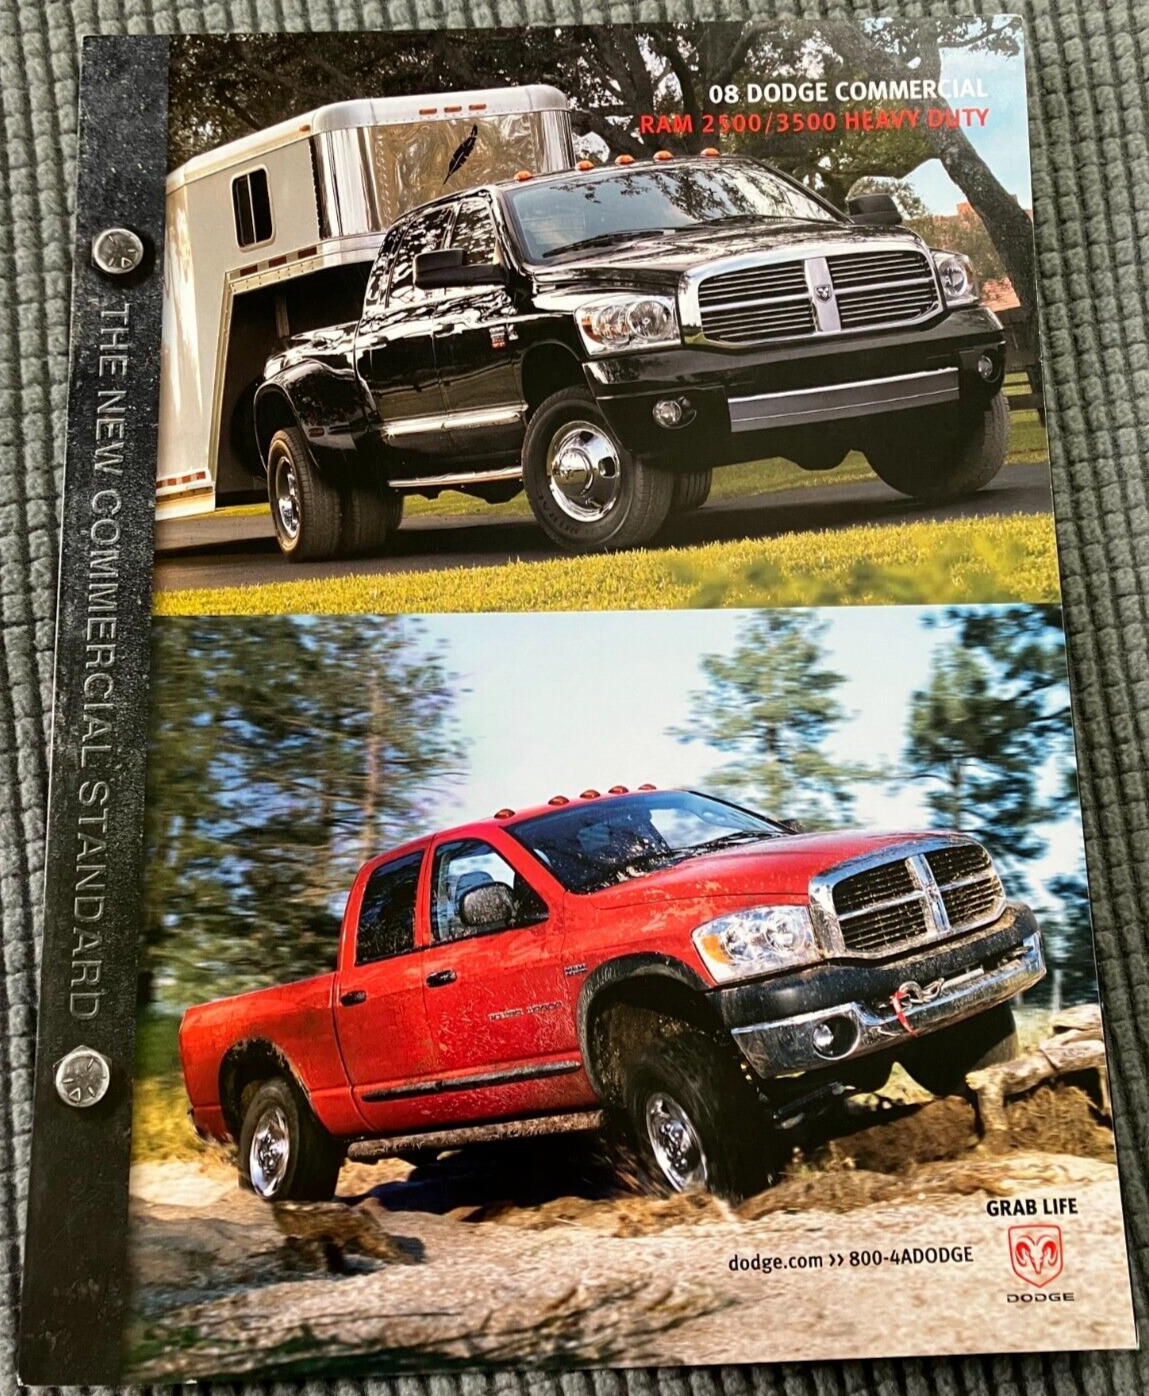 2008 Dodge Commercial 2500 & 3500 Heavy Duty - 2-Page Dealer Sales Brochure